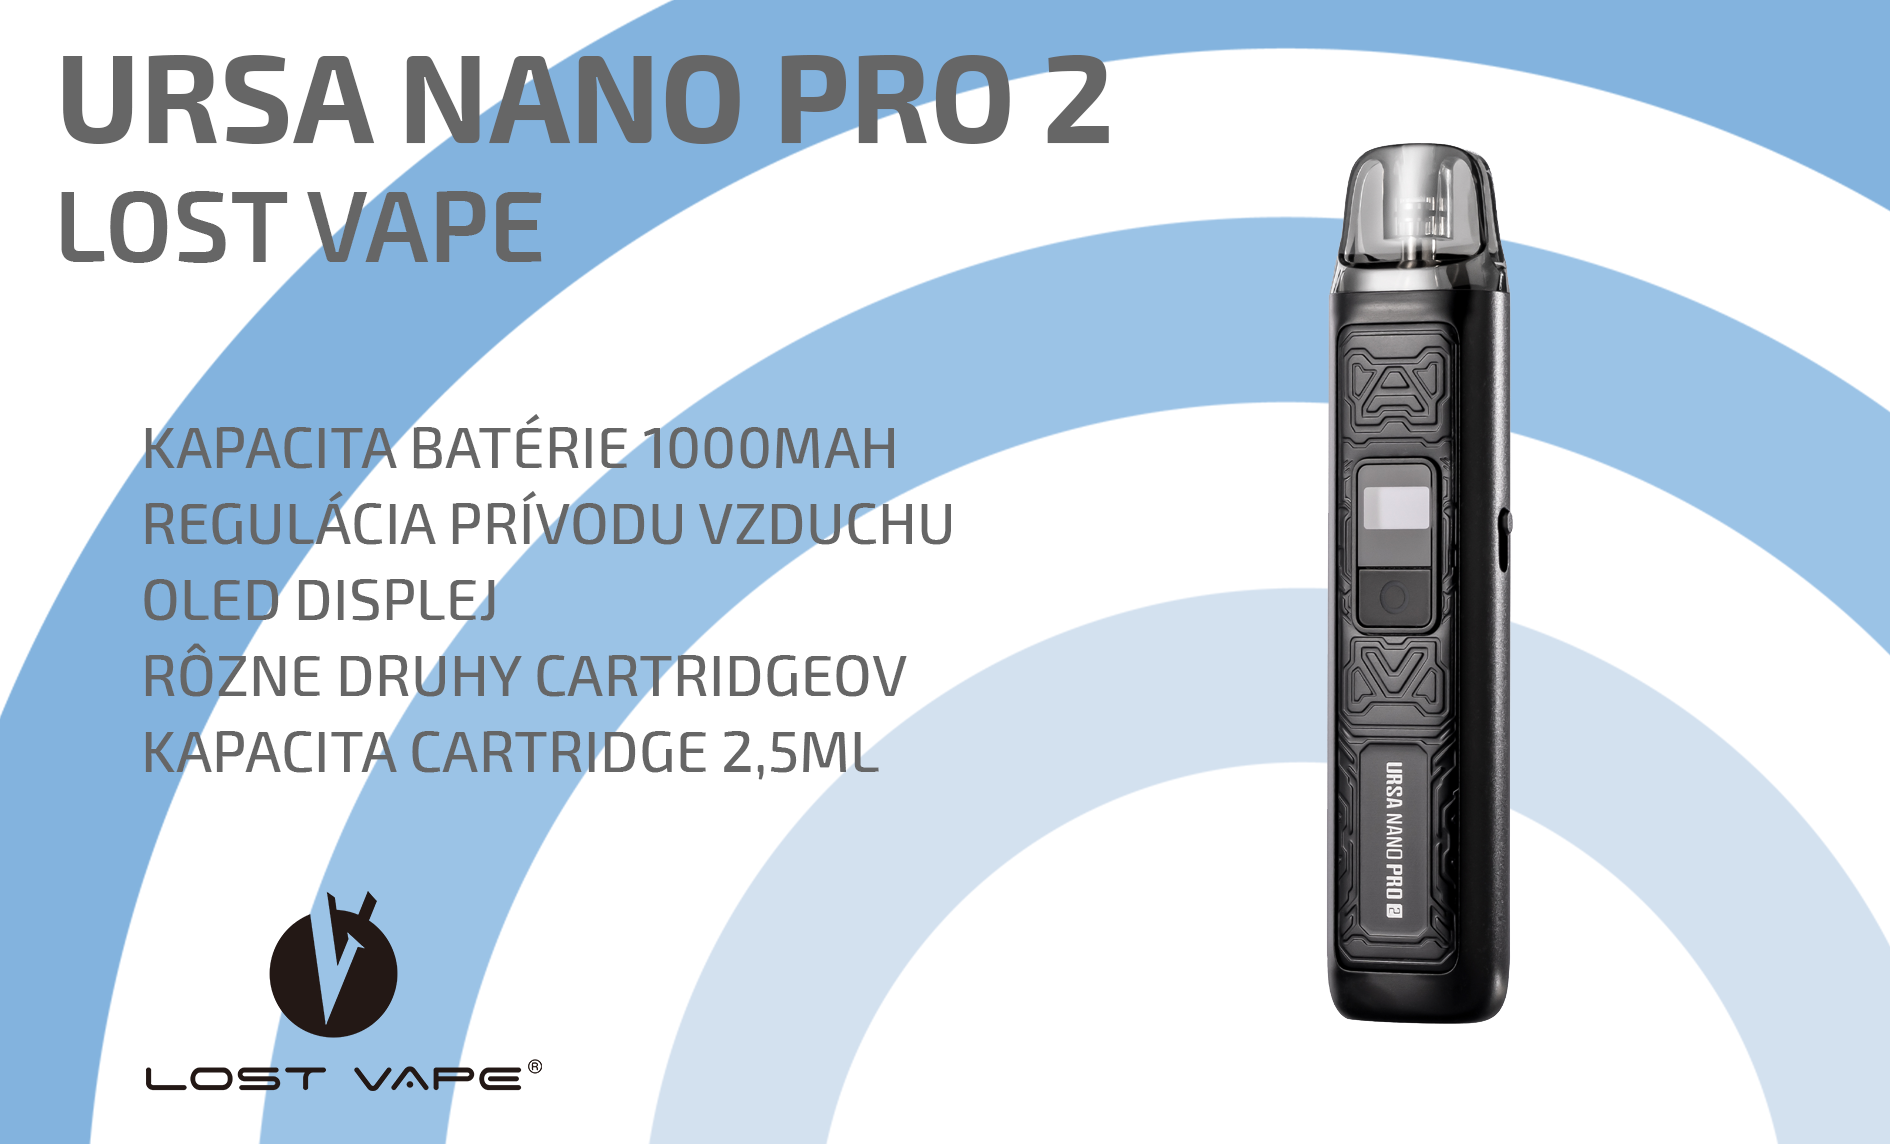 Lost Vape Ursa Nano Pro 2 1000mAh